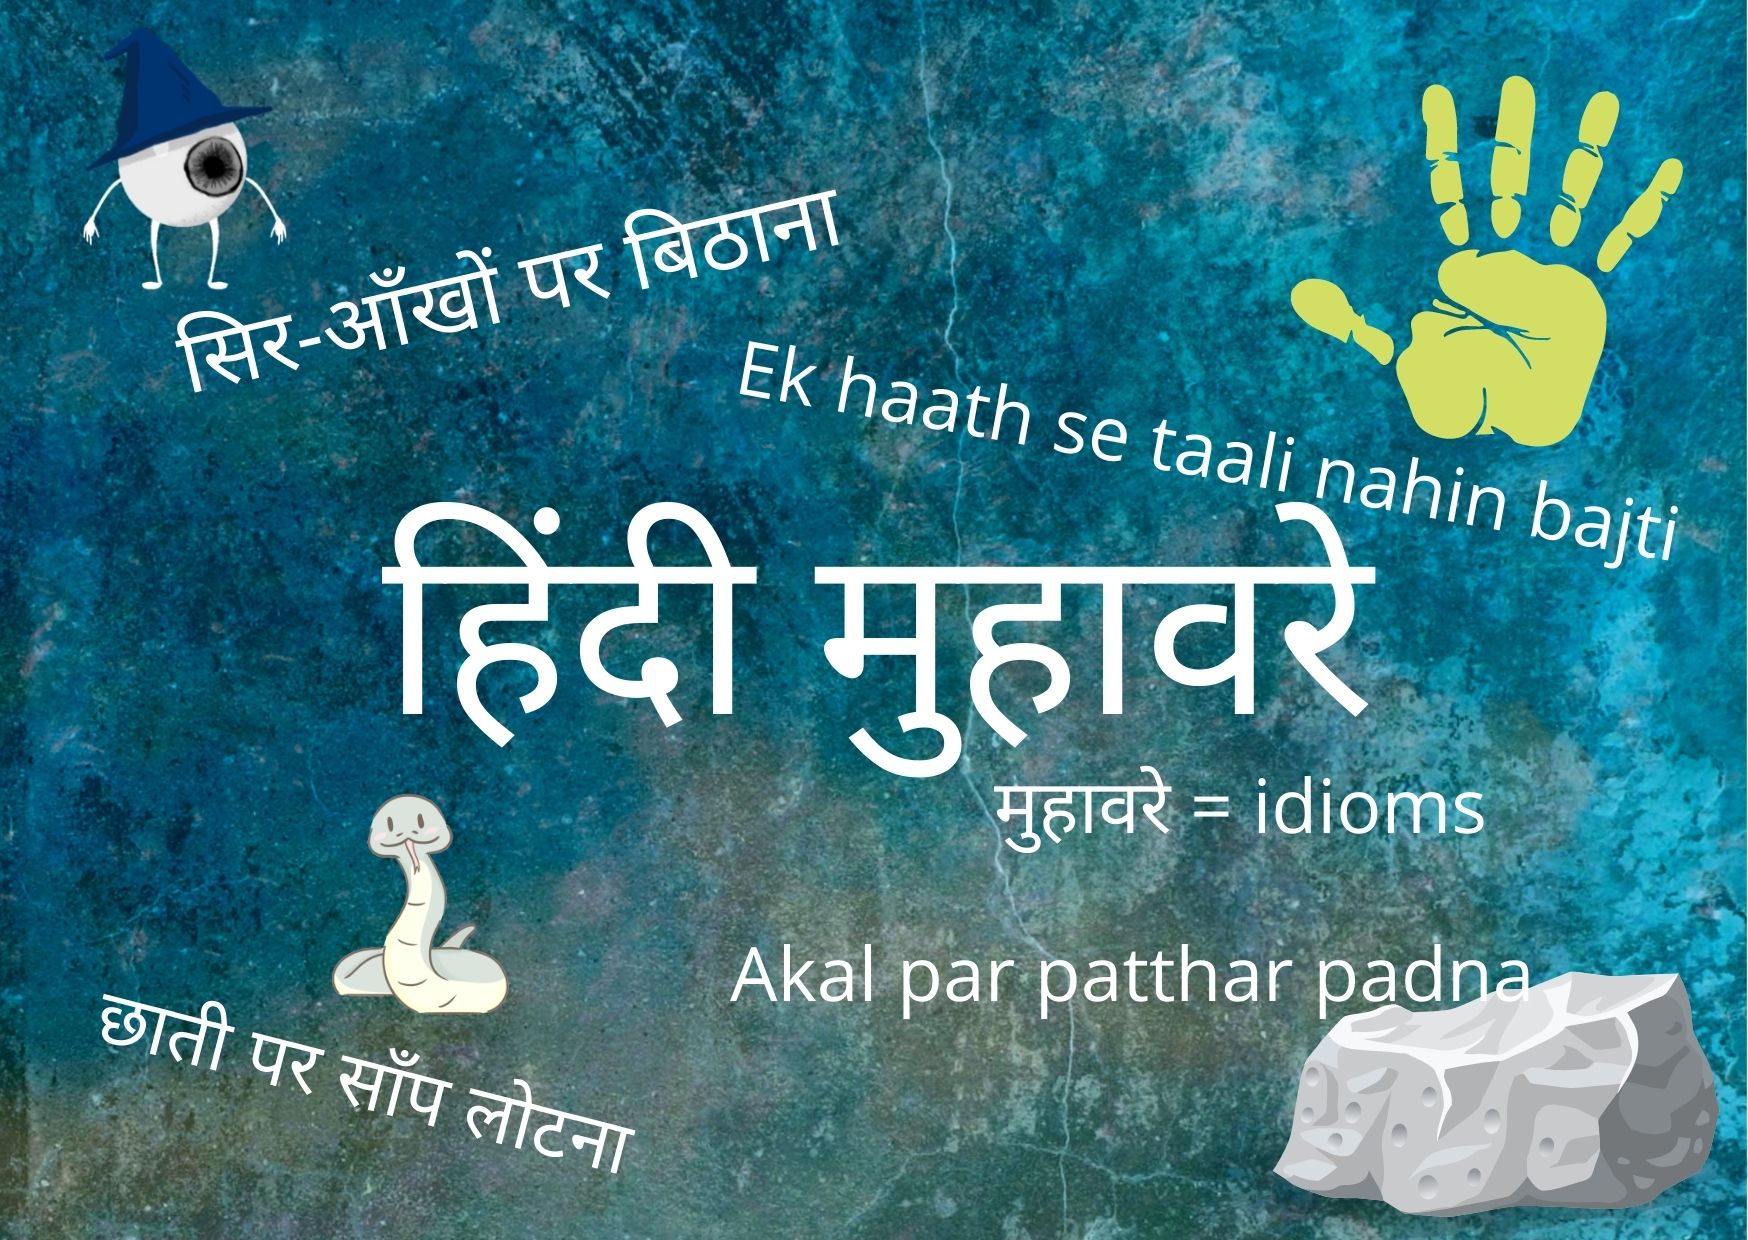 Hindi muhavare with English meaning